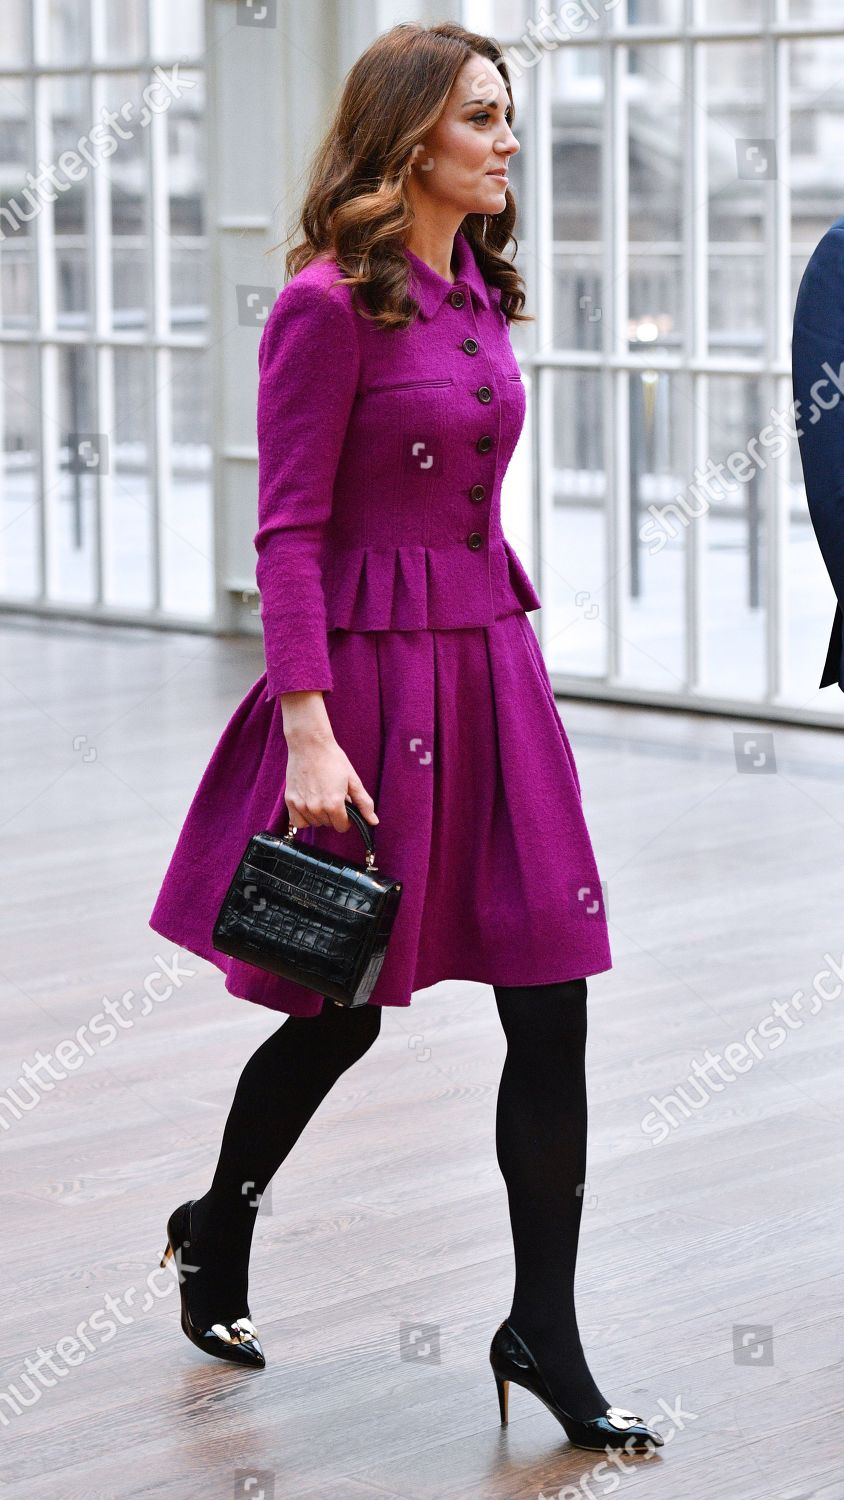 catherine-duchess-of-cambridge-visit-to-the-royal-opera-house-london-uk-shutterstock-editorial-10063903c.jpg